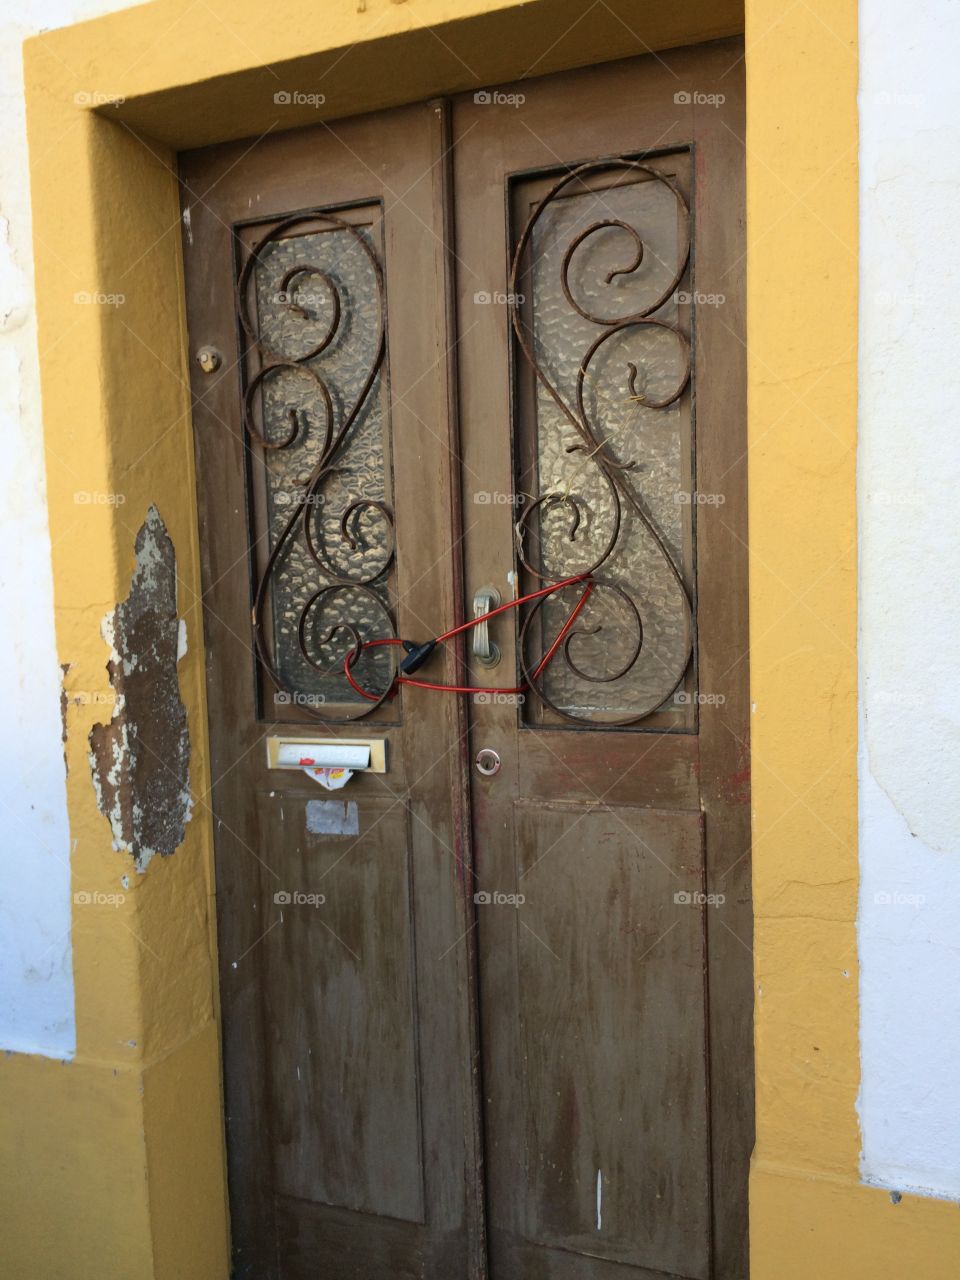 An odd way to lock your door. Found in Lagos, Algarve, Portugal